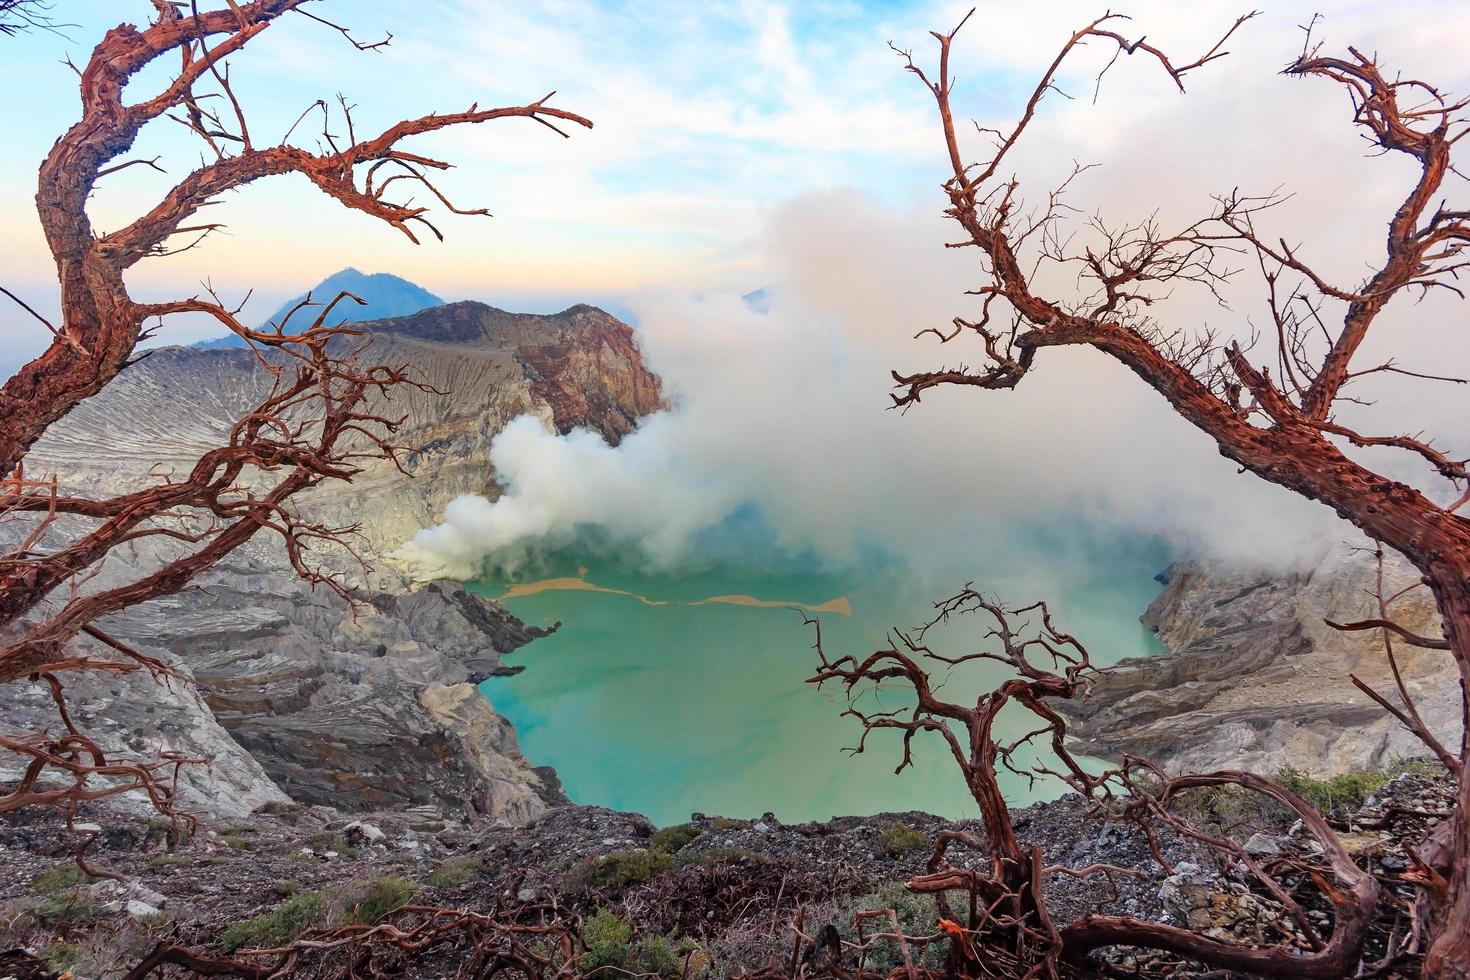 volcán kawah ijen al amanecer de java oriental, indonesia. foto